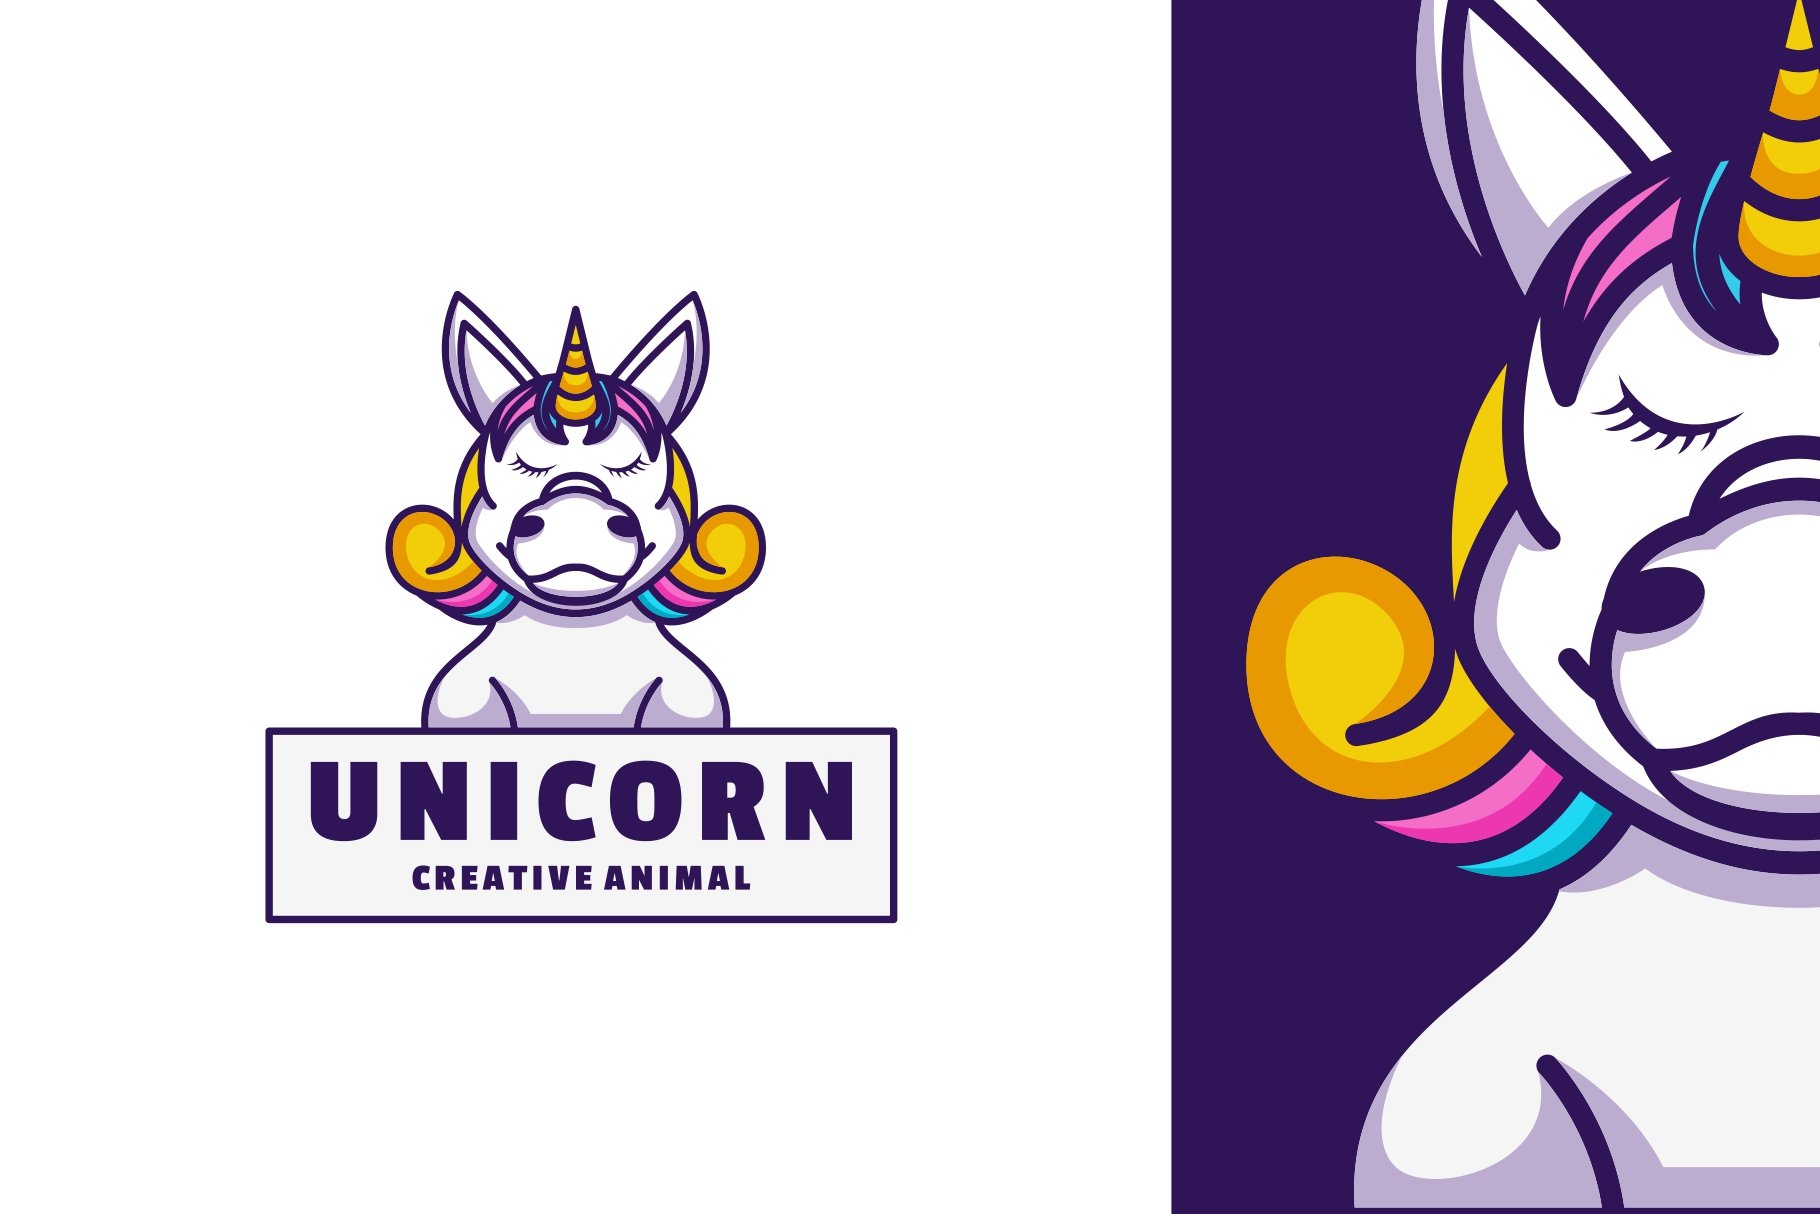 Unicorn Cartoon Logo cover image.